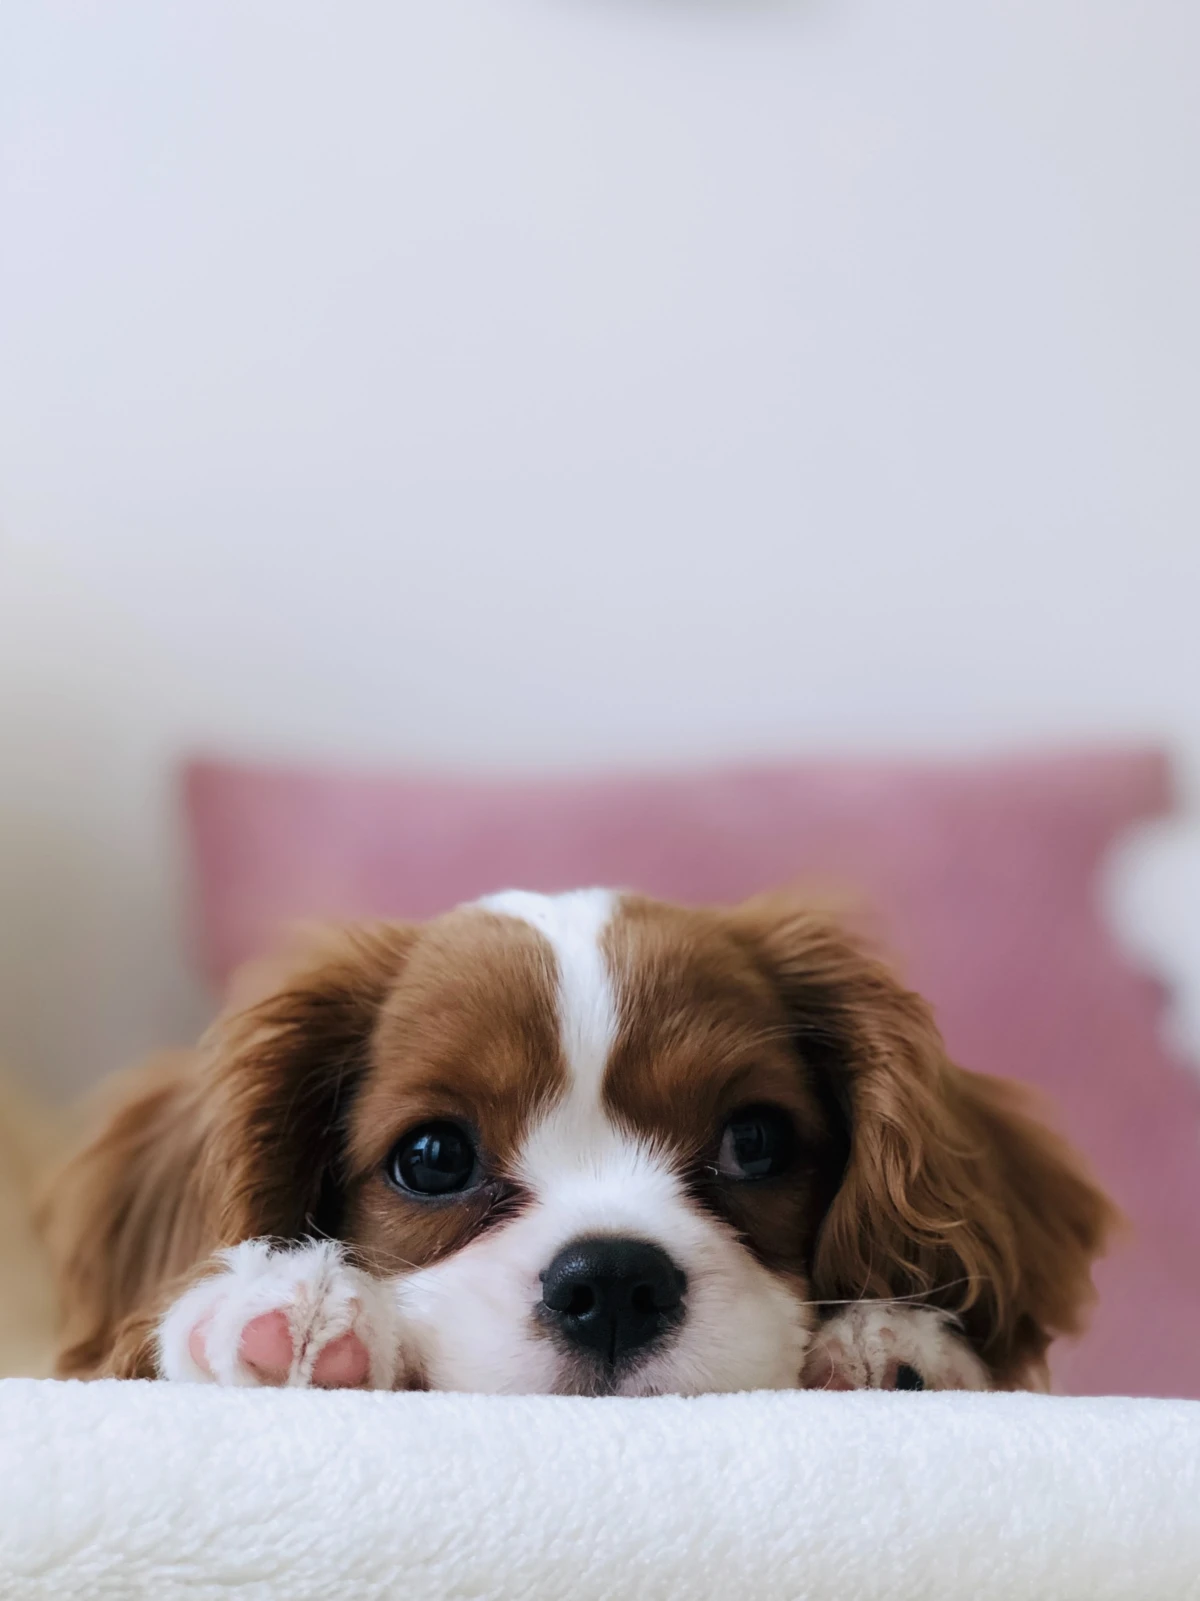 little dog with big eyes